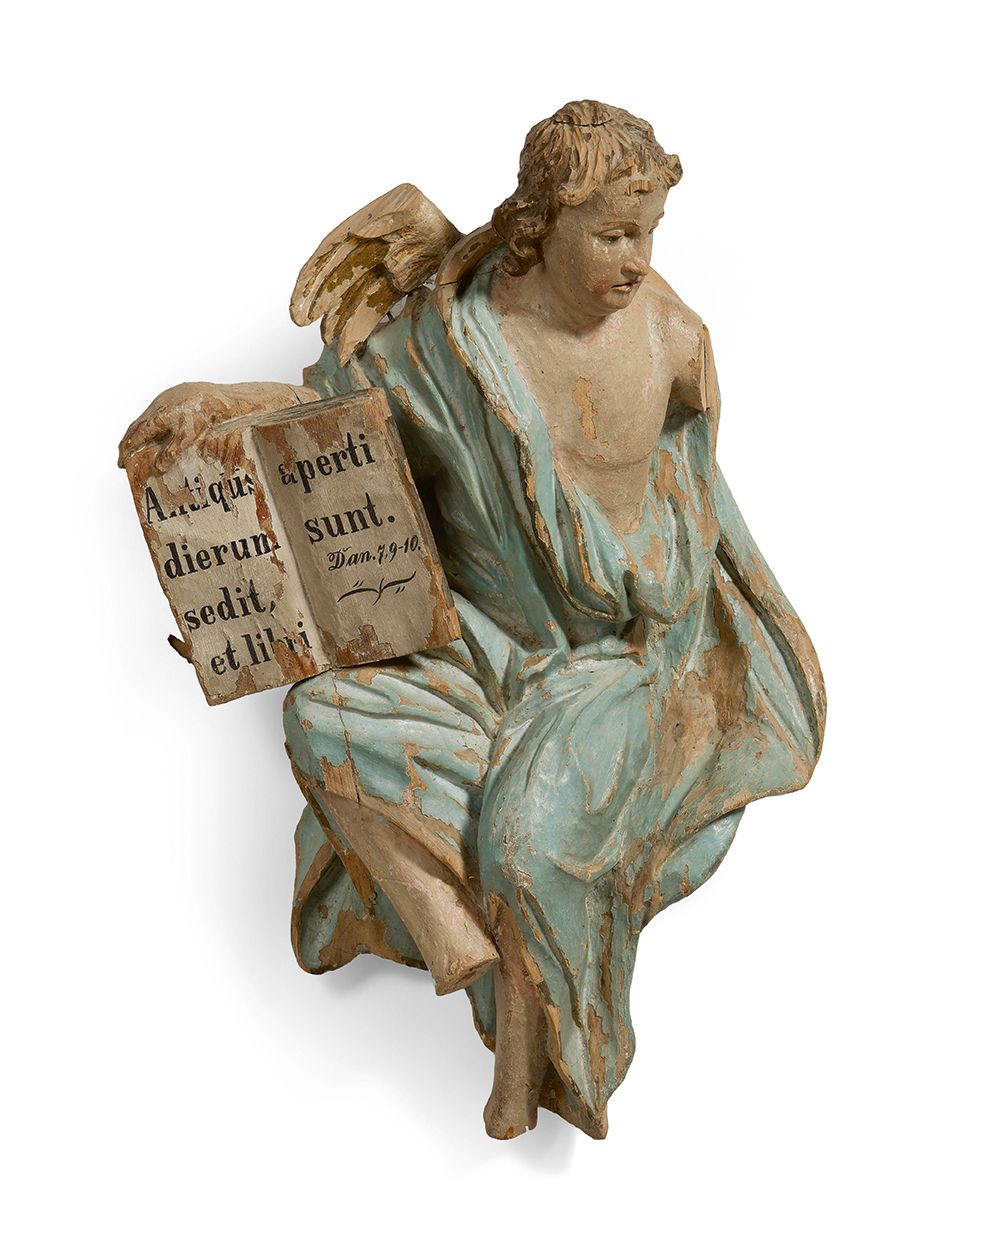 Null 两个雕刻和涂漆的多色悬挂天使。一个拿着一本打开的书，上面刻着但以理书中的两段话："Antiqus dierum sedit"（7:9），然后是 "et&hellip;